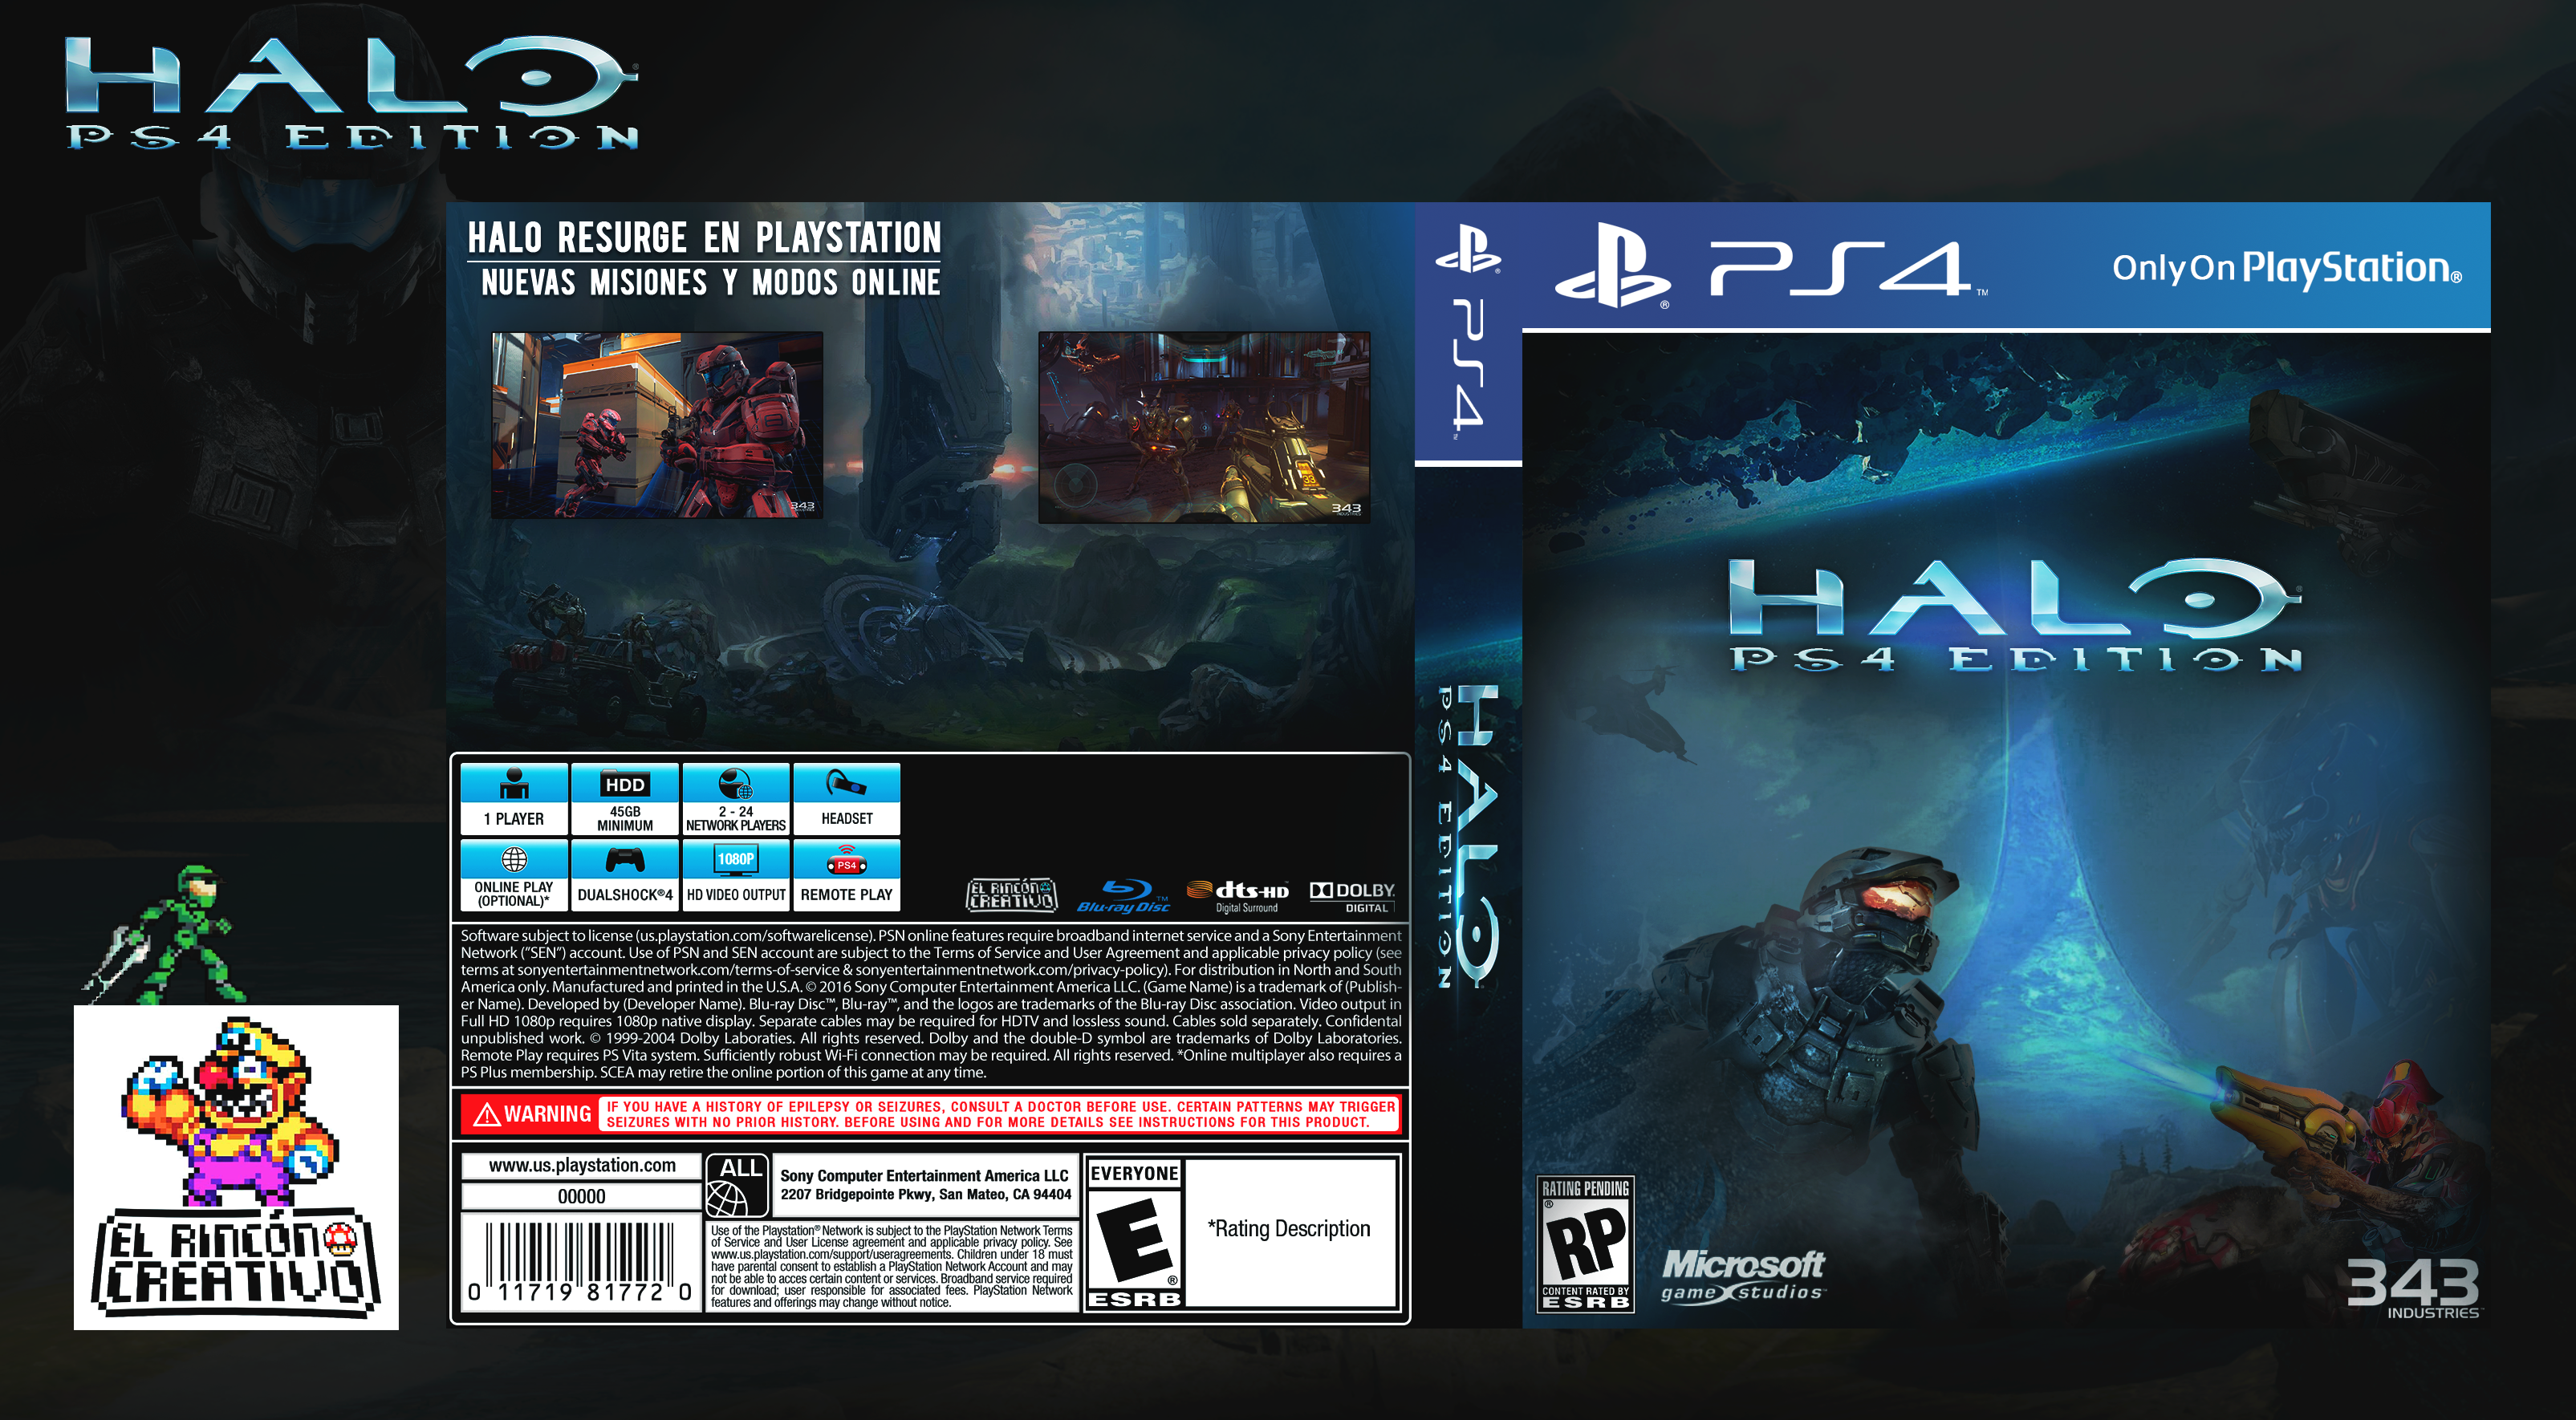 Halo PS4 Edition ElRinconCreativo on DeviantArt